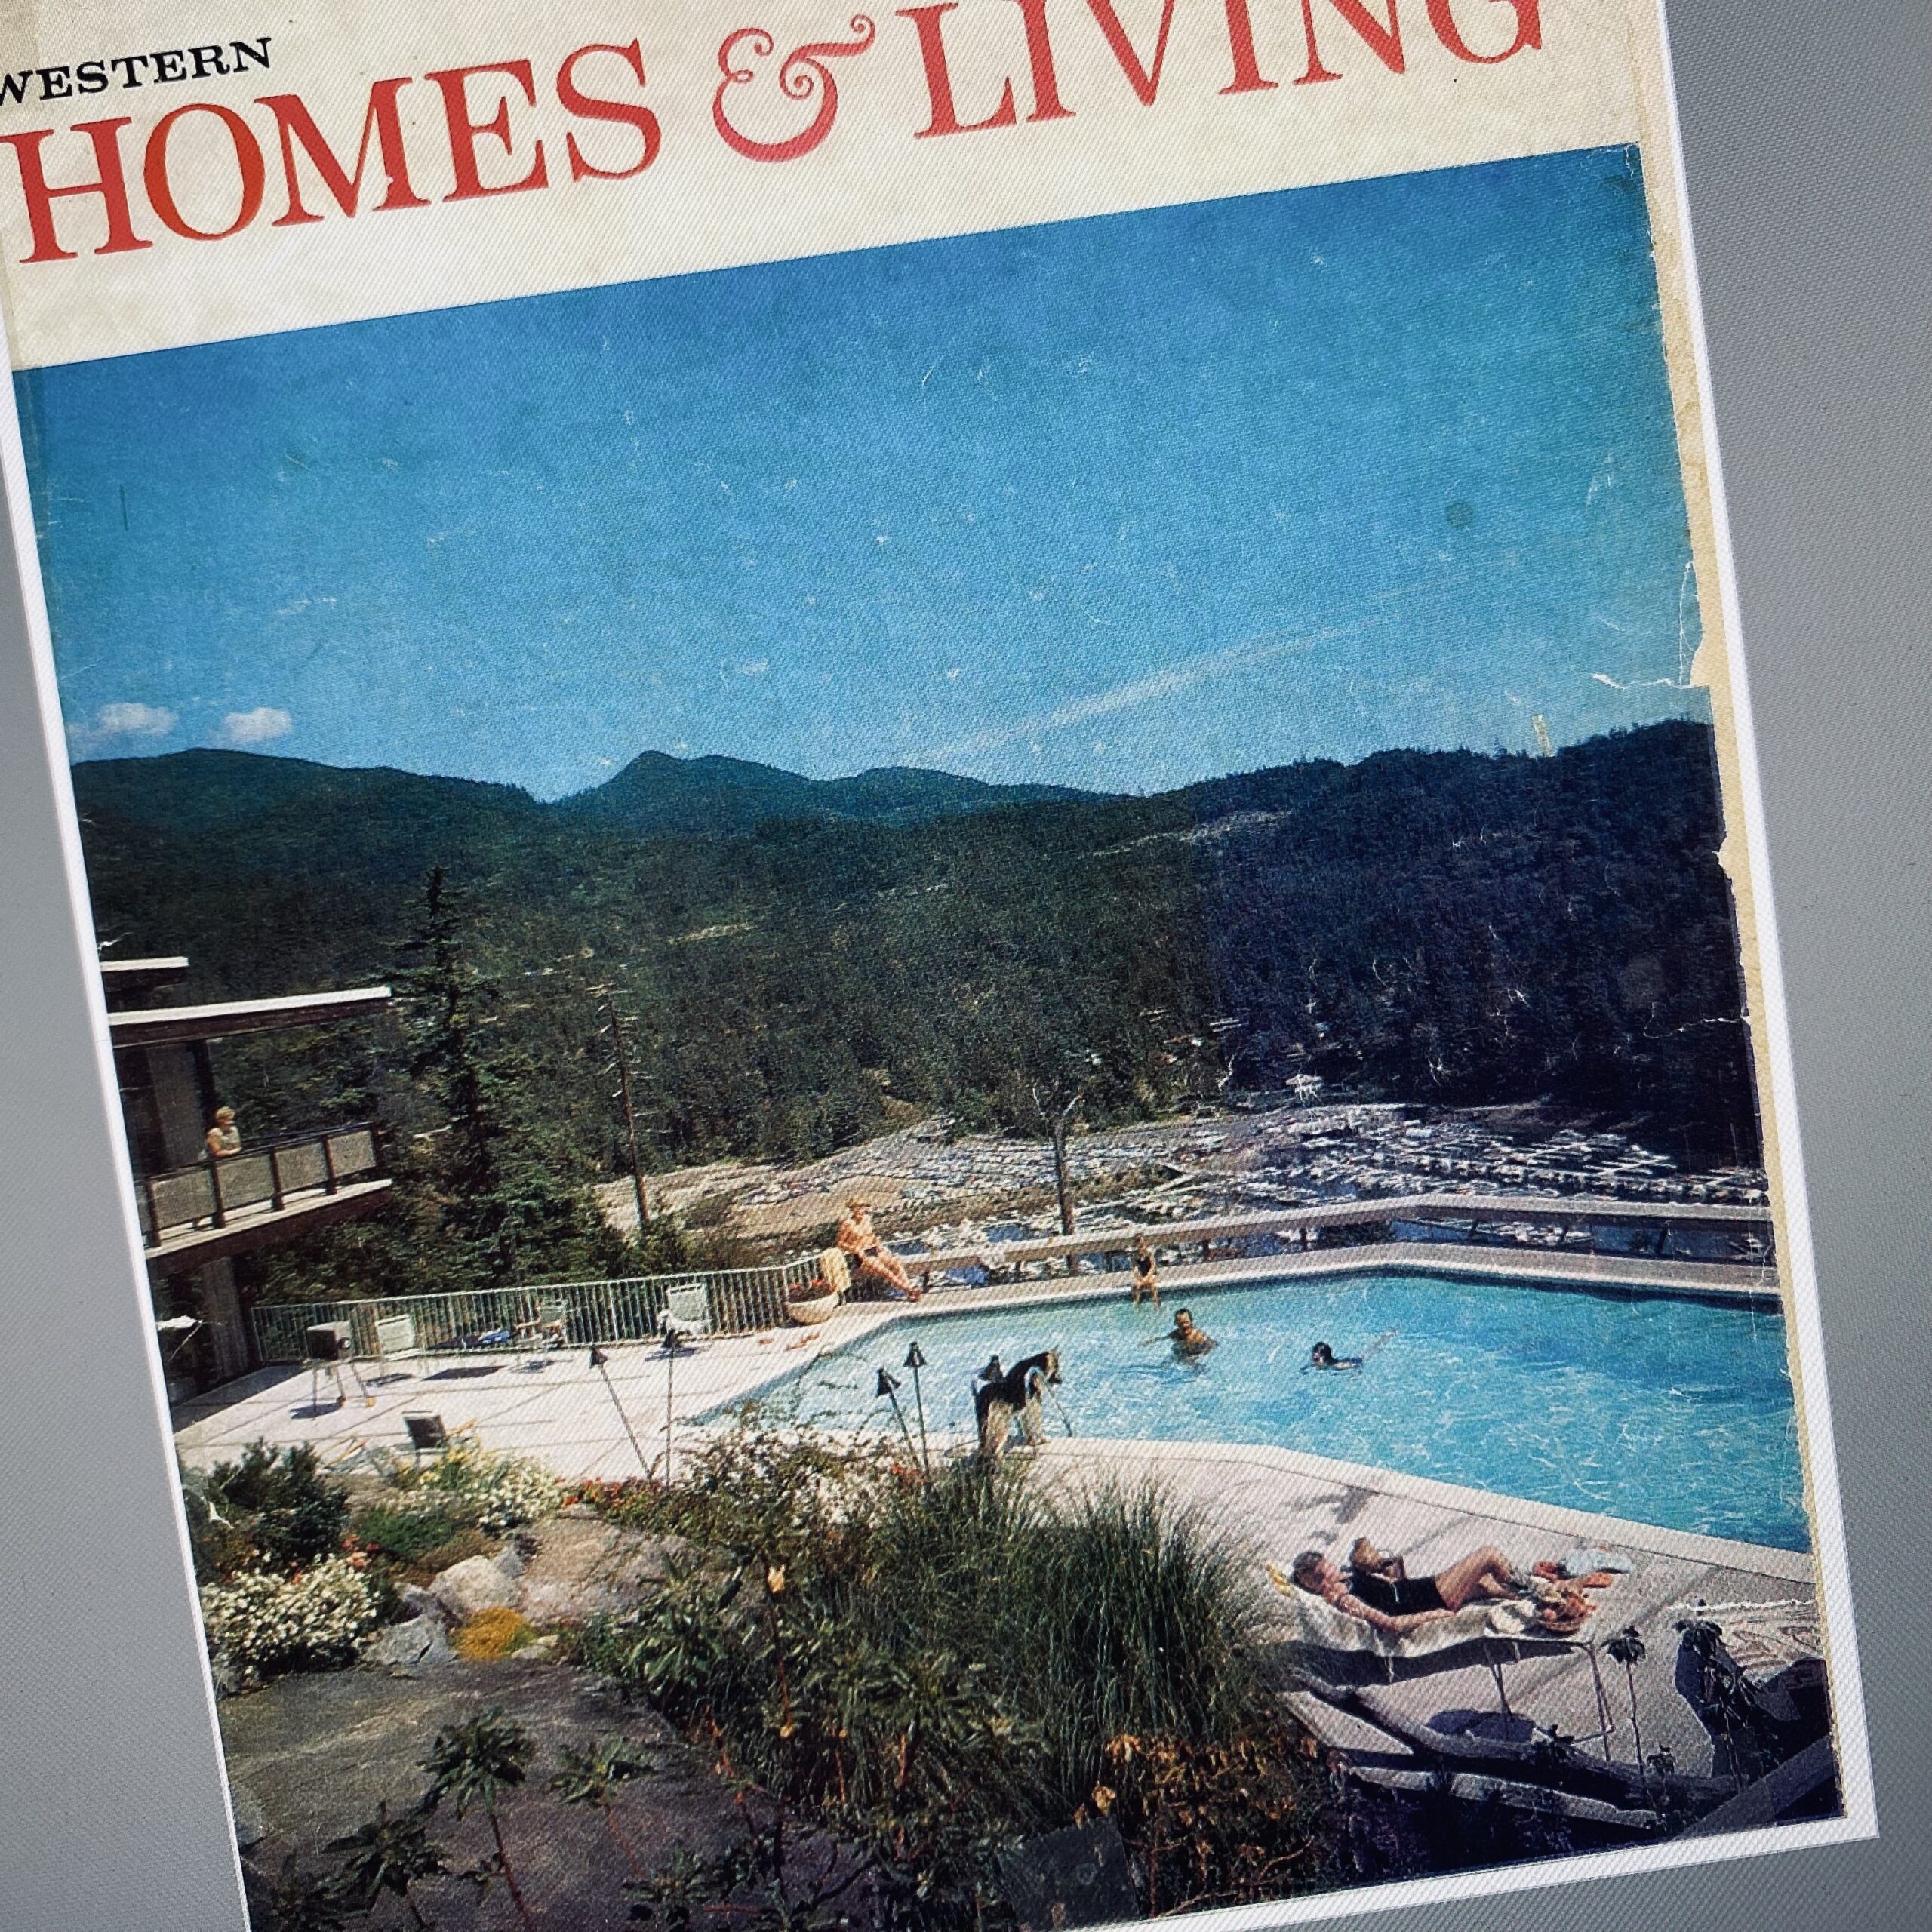 Western Homes & Living. May 1964. Photo by Selwyn Pullan.